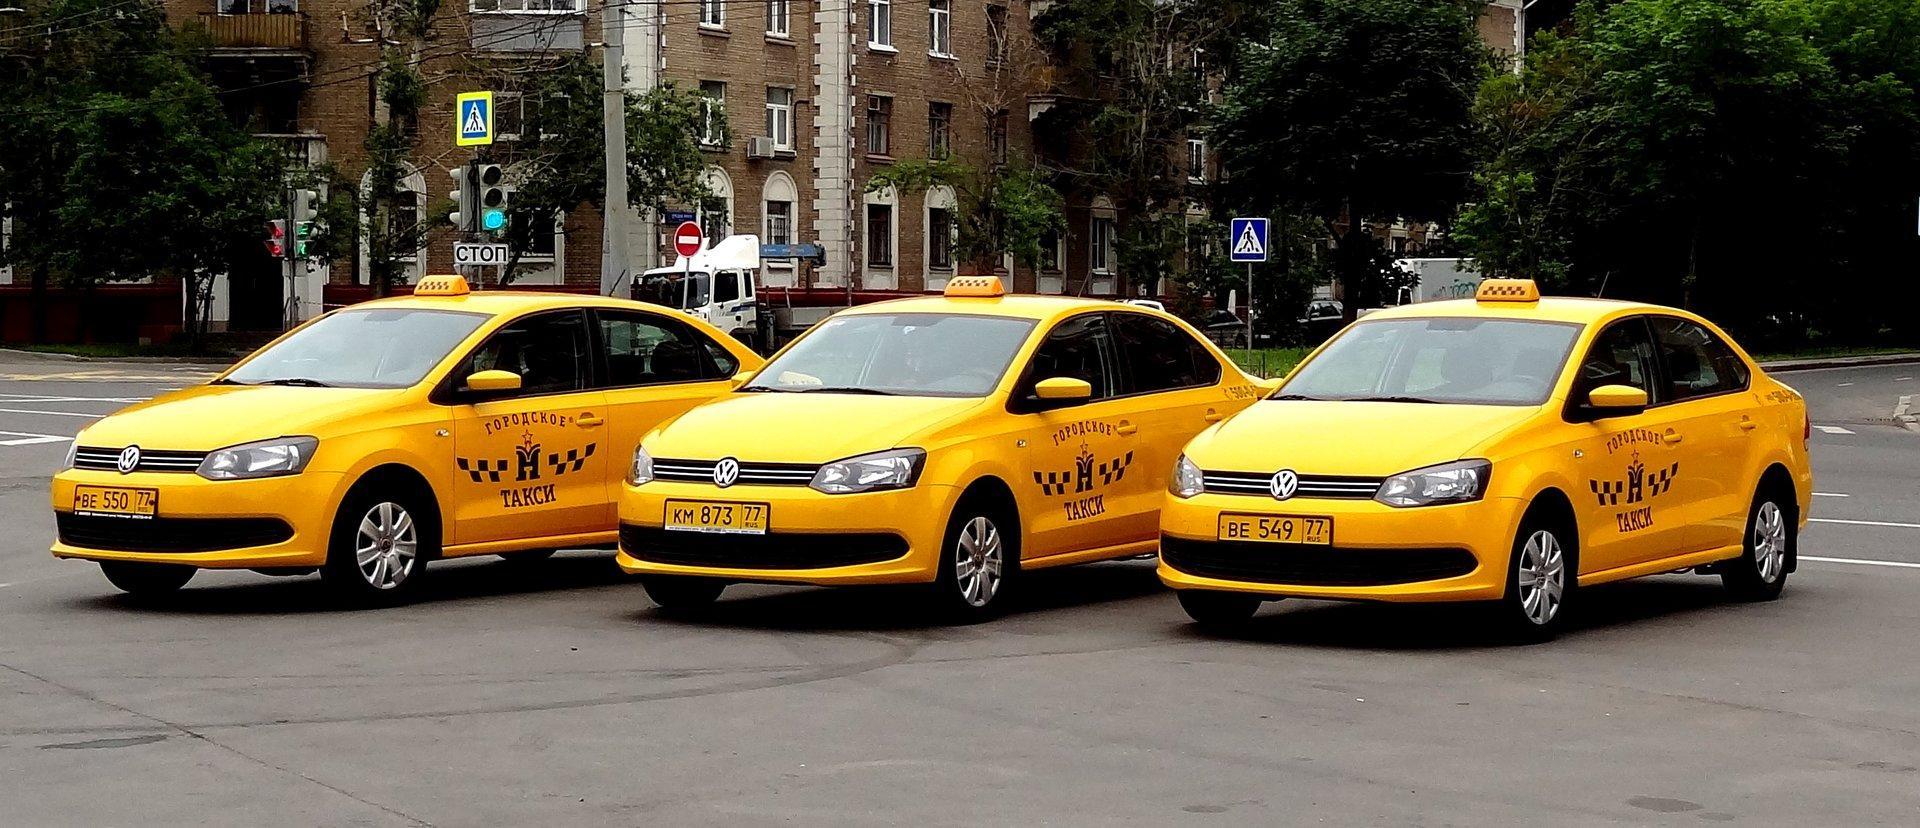 Автомобили подходящие под такси. Машина "такси". Автомобиль «такси». Легковой автомобиль такси. Желтое такси.